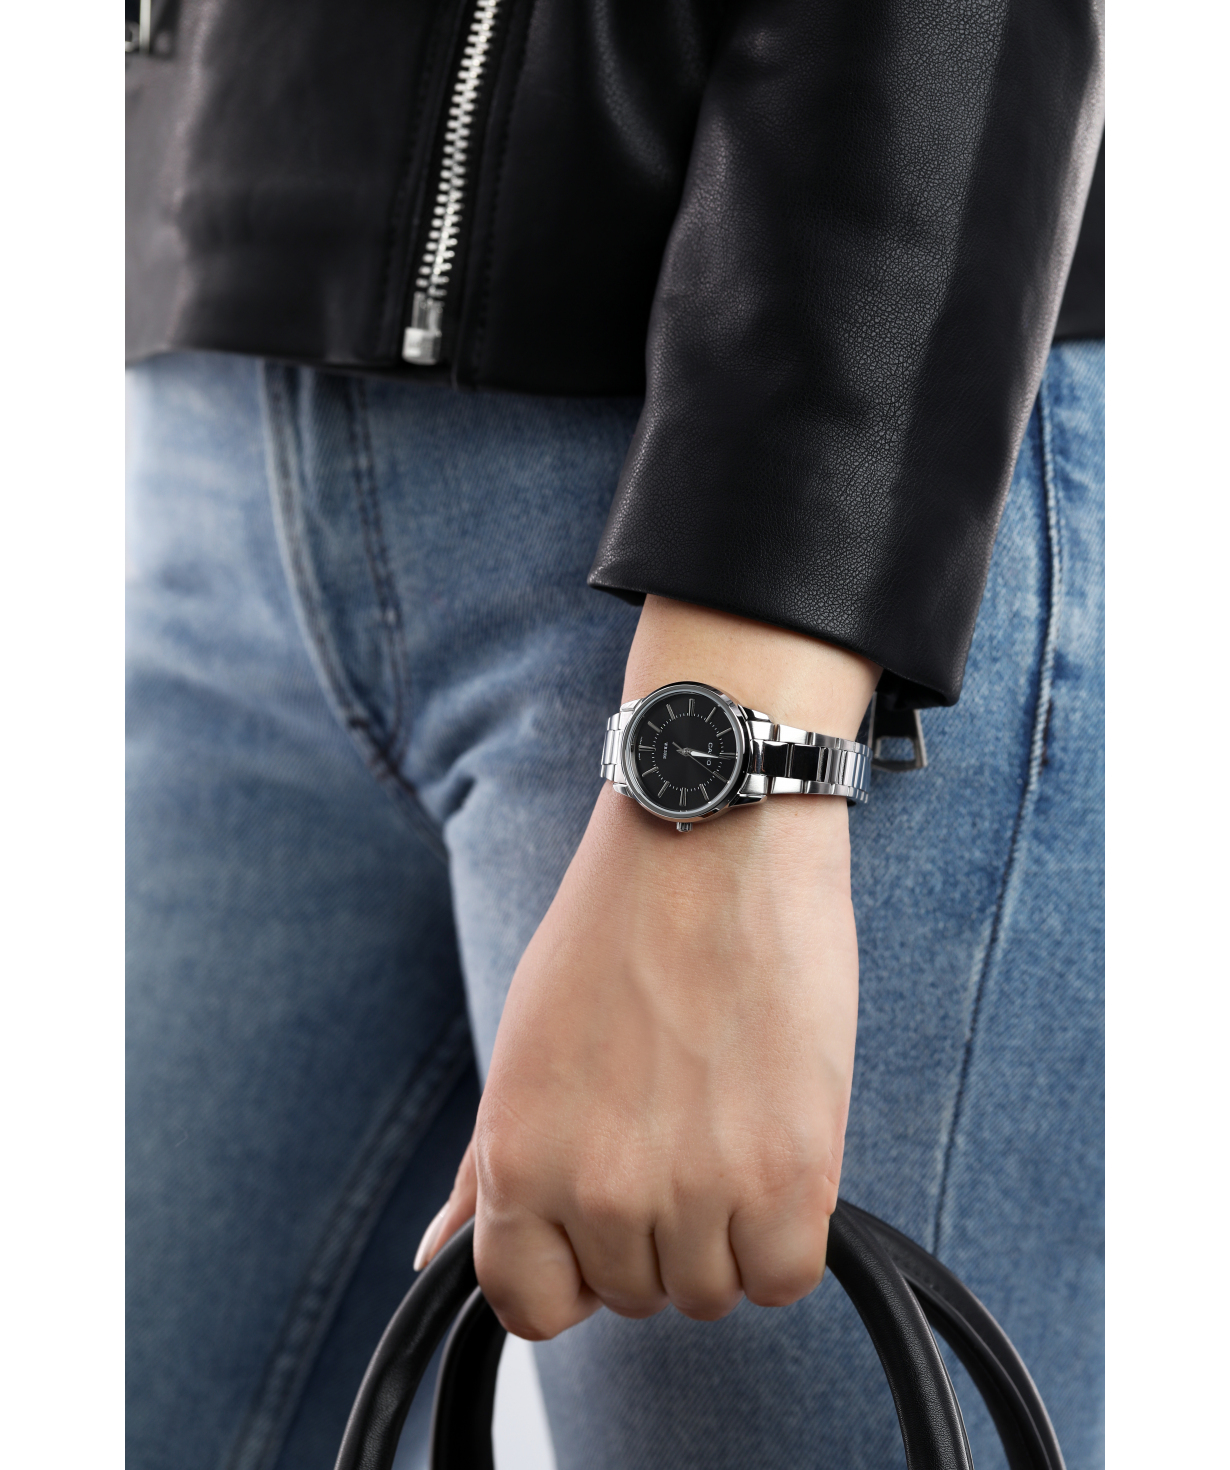 Ժամացույց  «Casio» ձեռքի  LTP-1303D-1AVDF